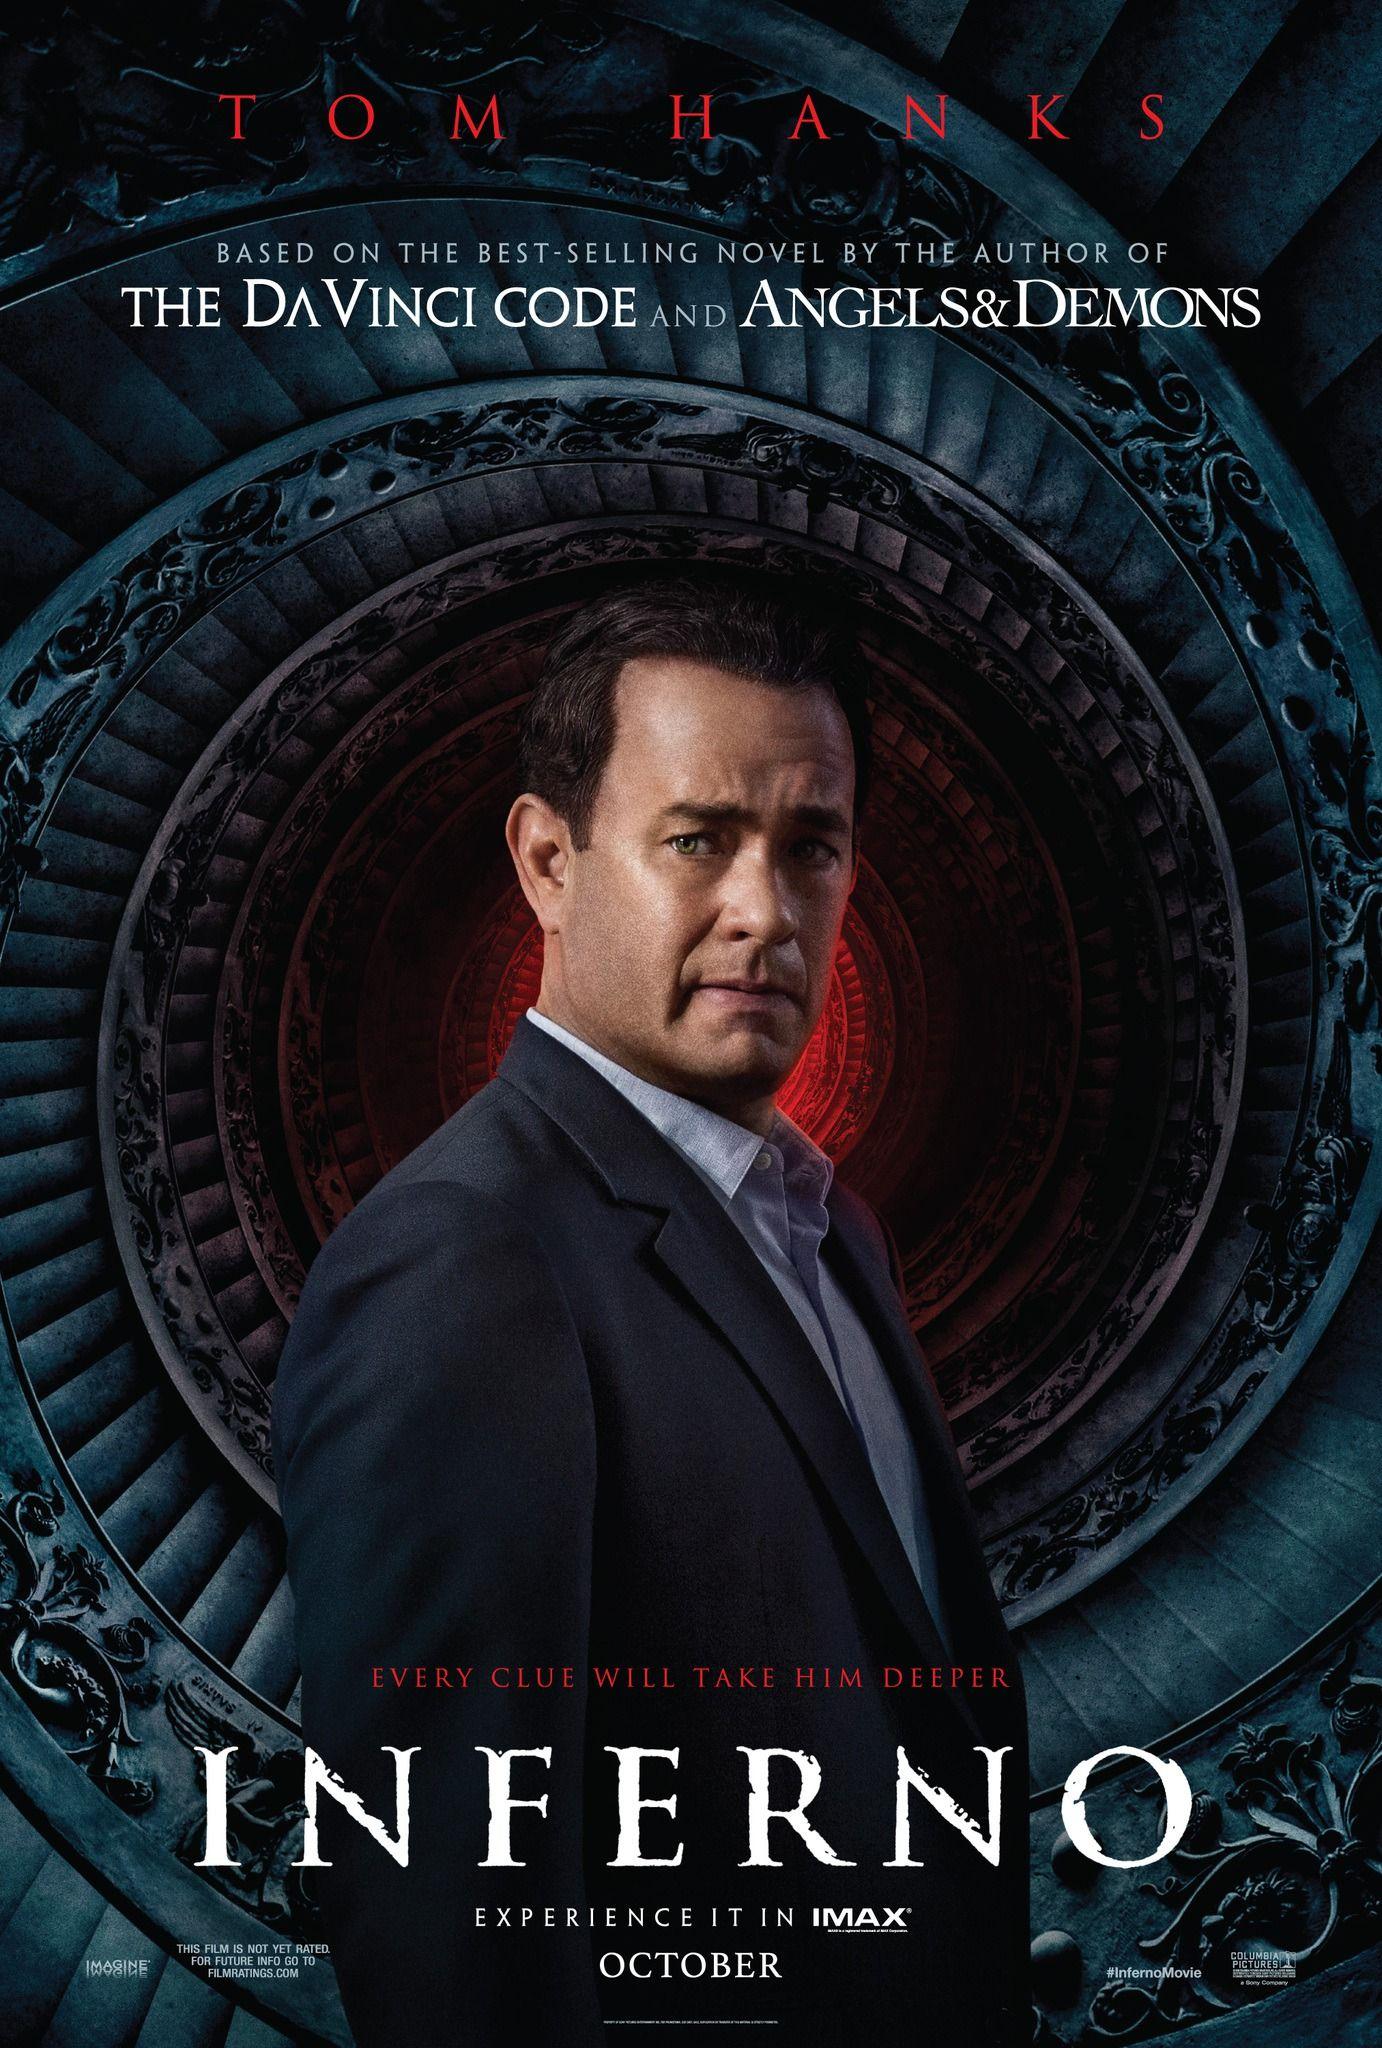 Watch: Tom Hanks Is Back As Robert Langdon In First Trailer